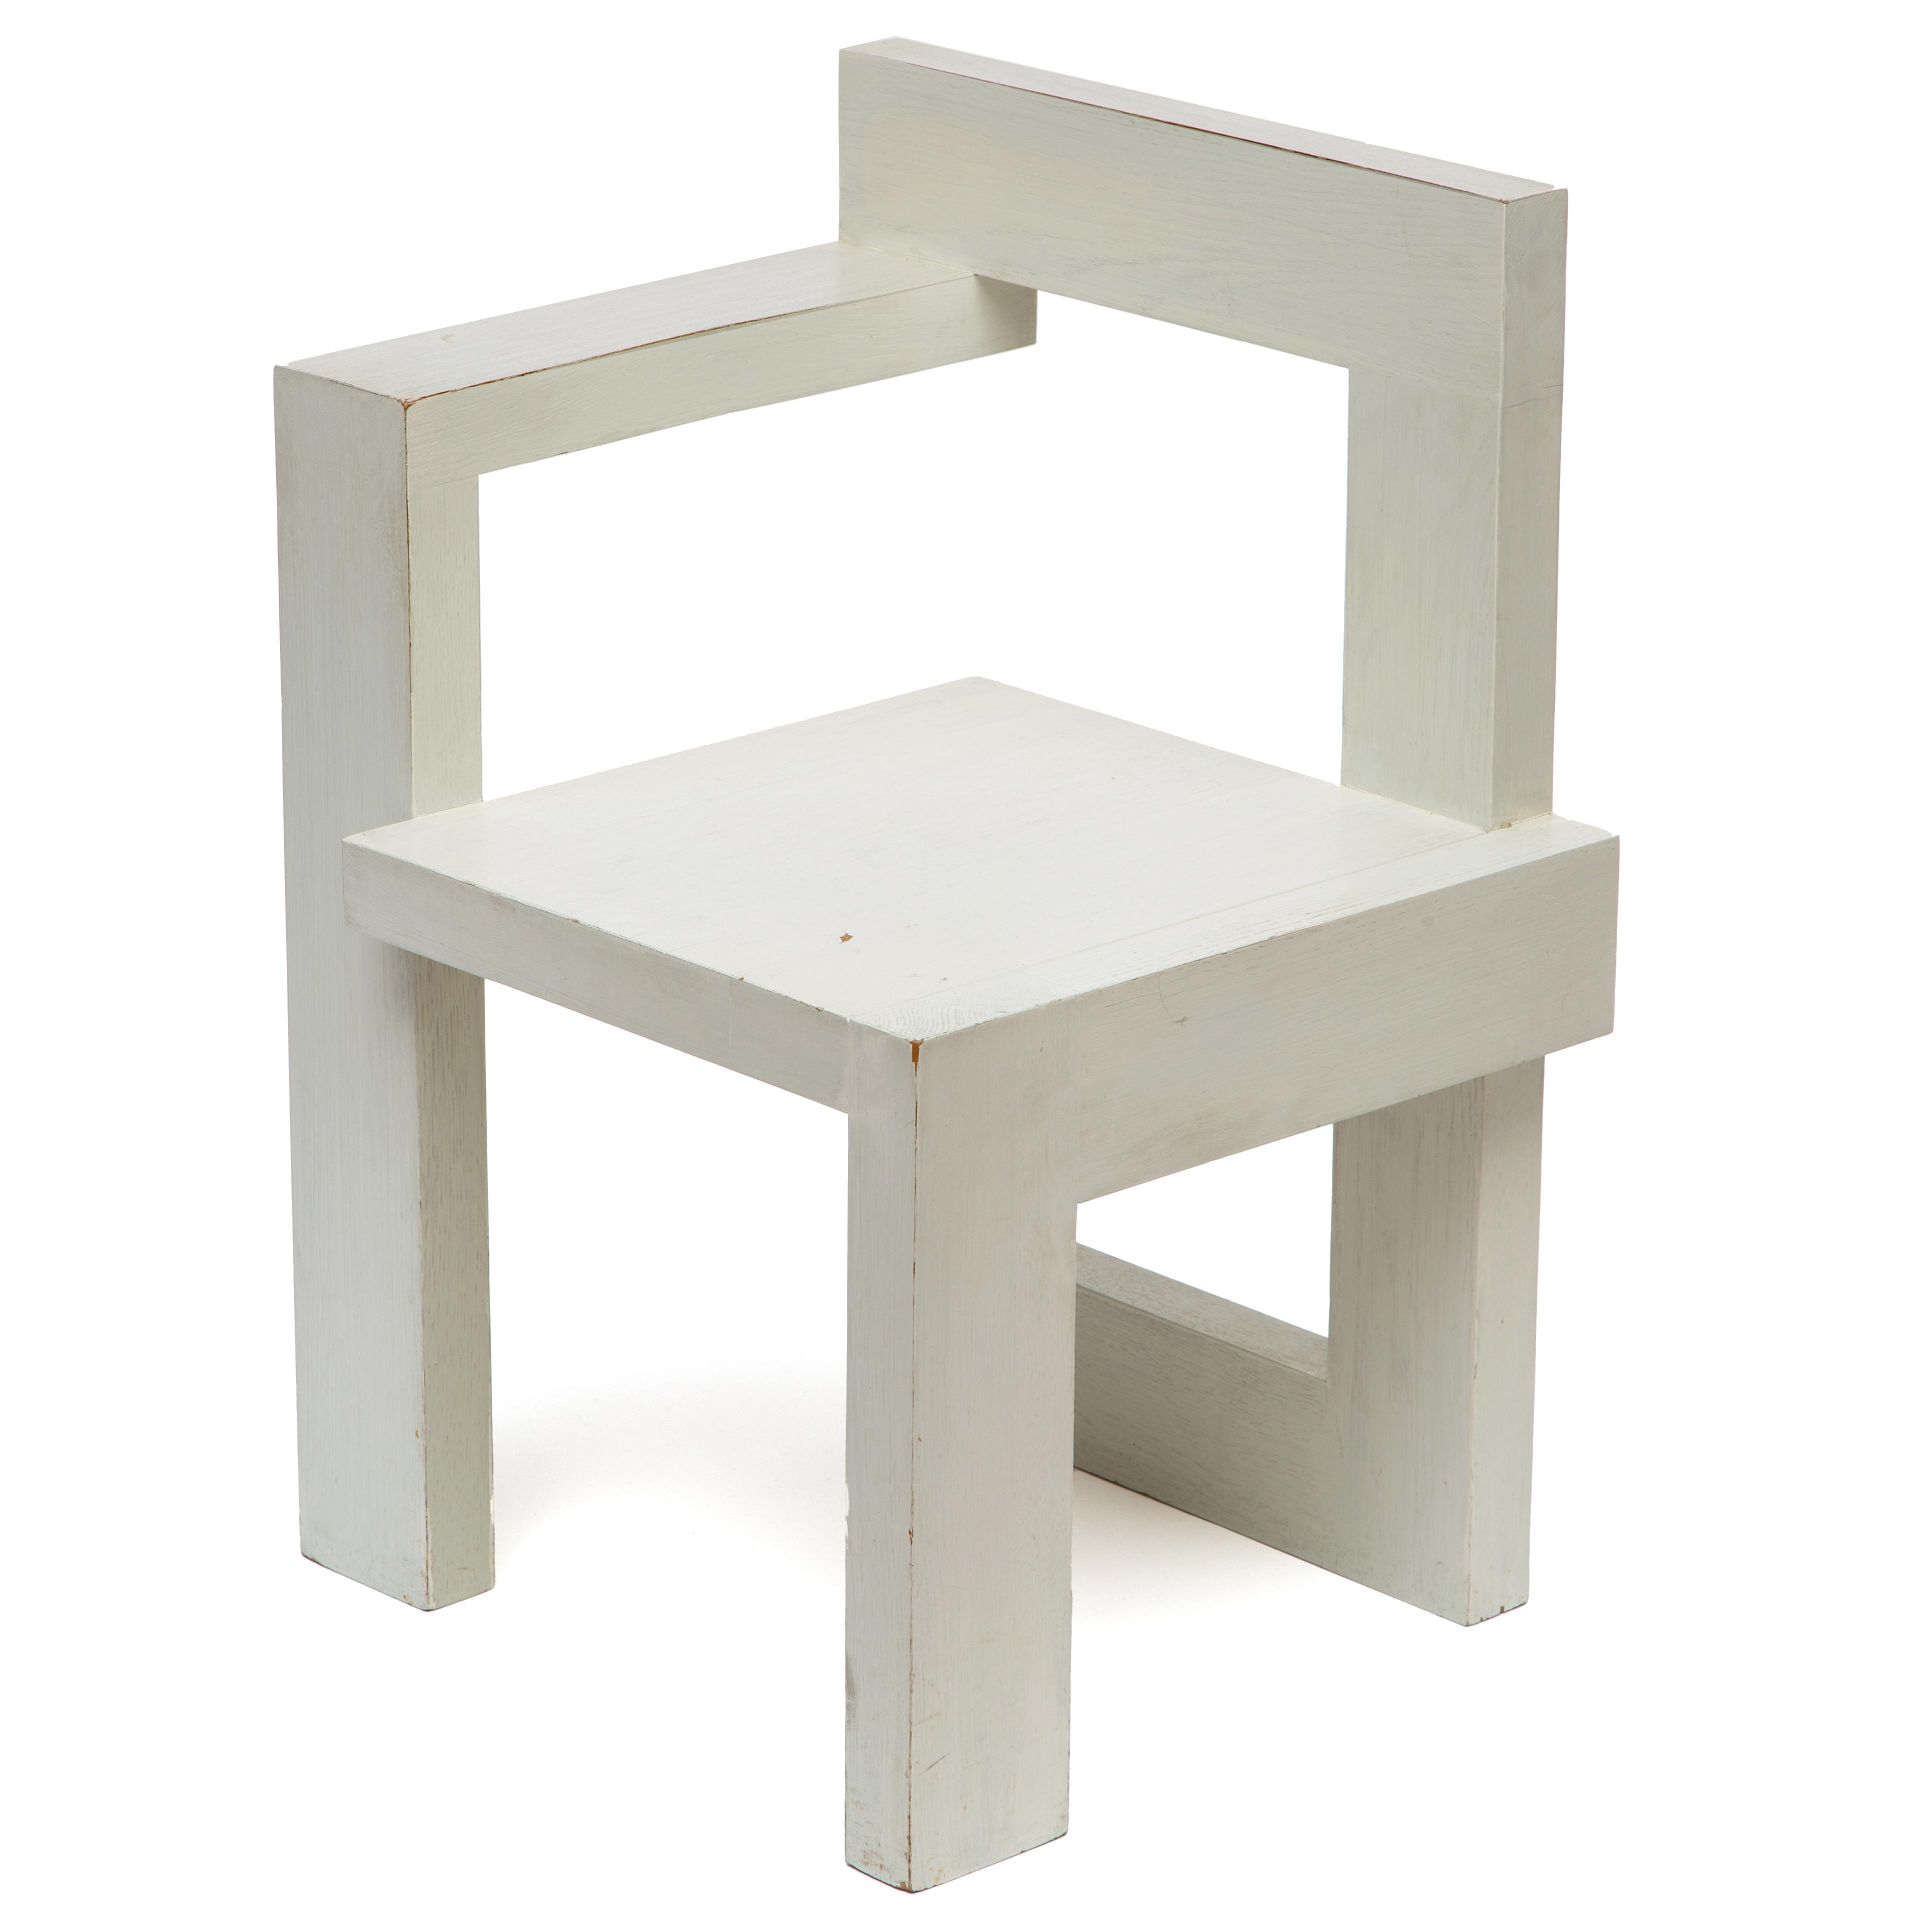 Gerrit Rietveld (1888-1964), Steltman stoel. - Image 4 of 6